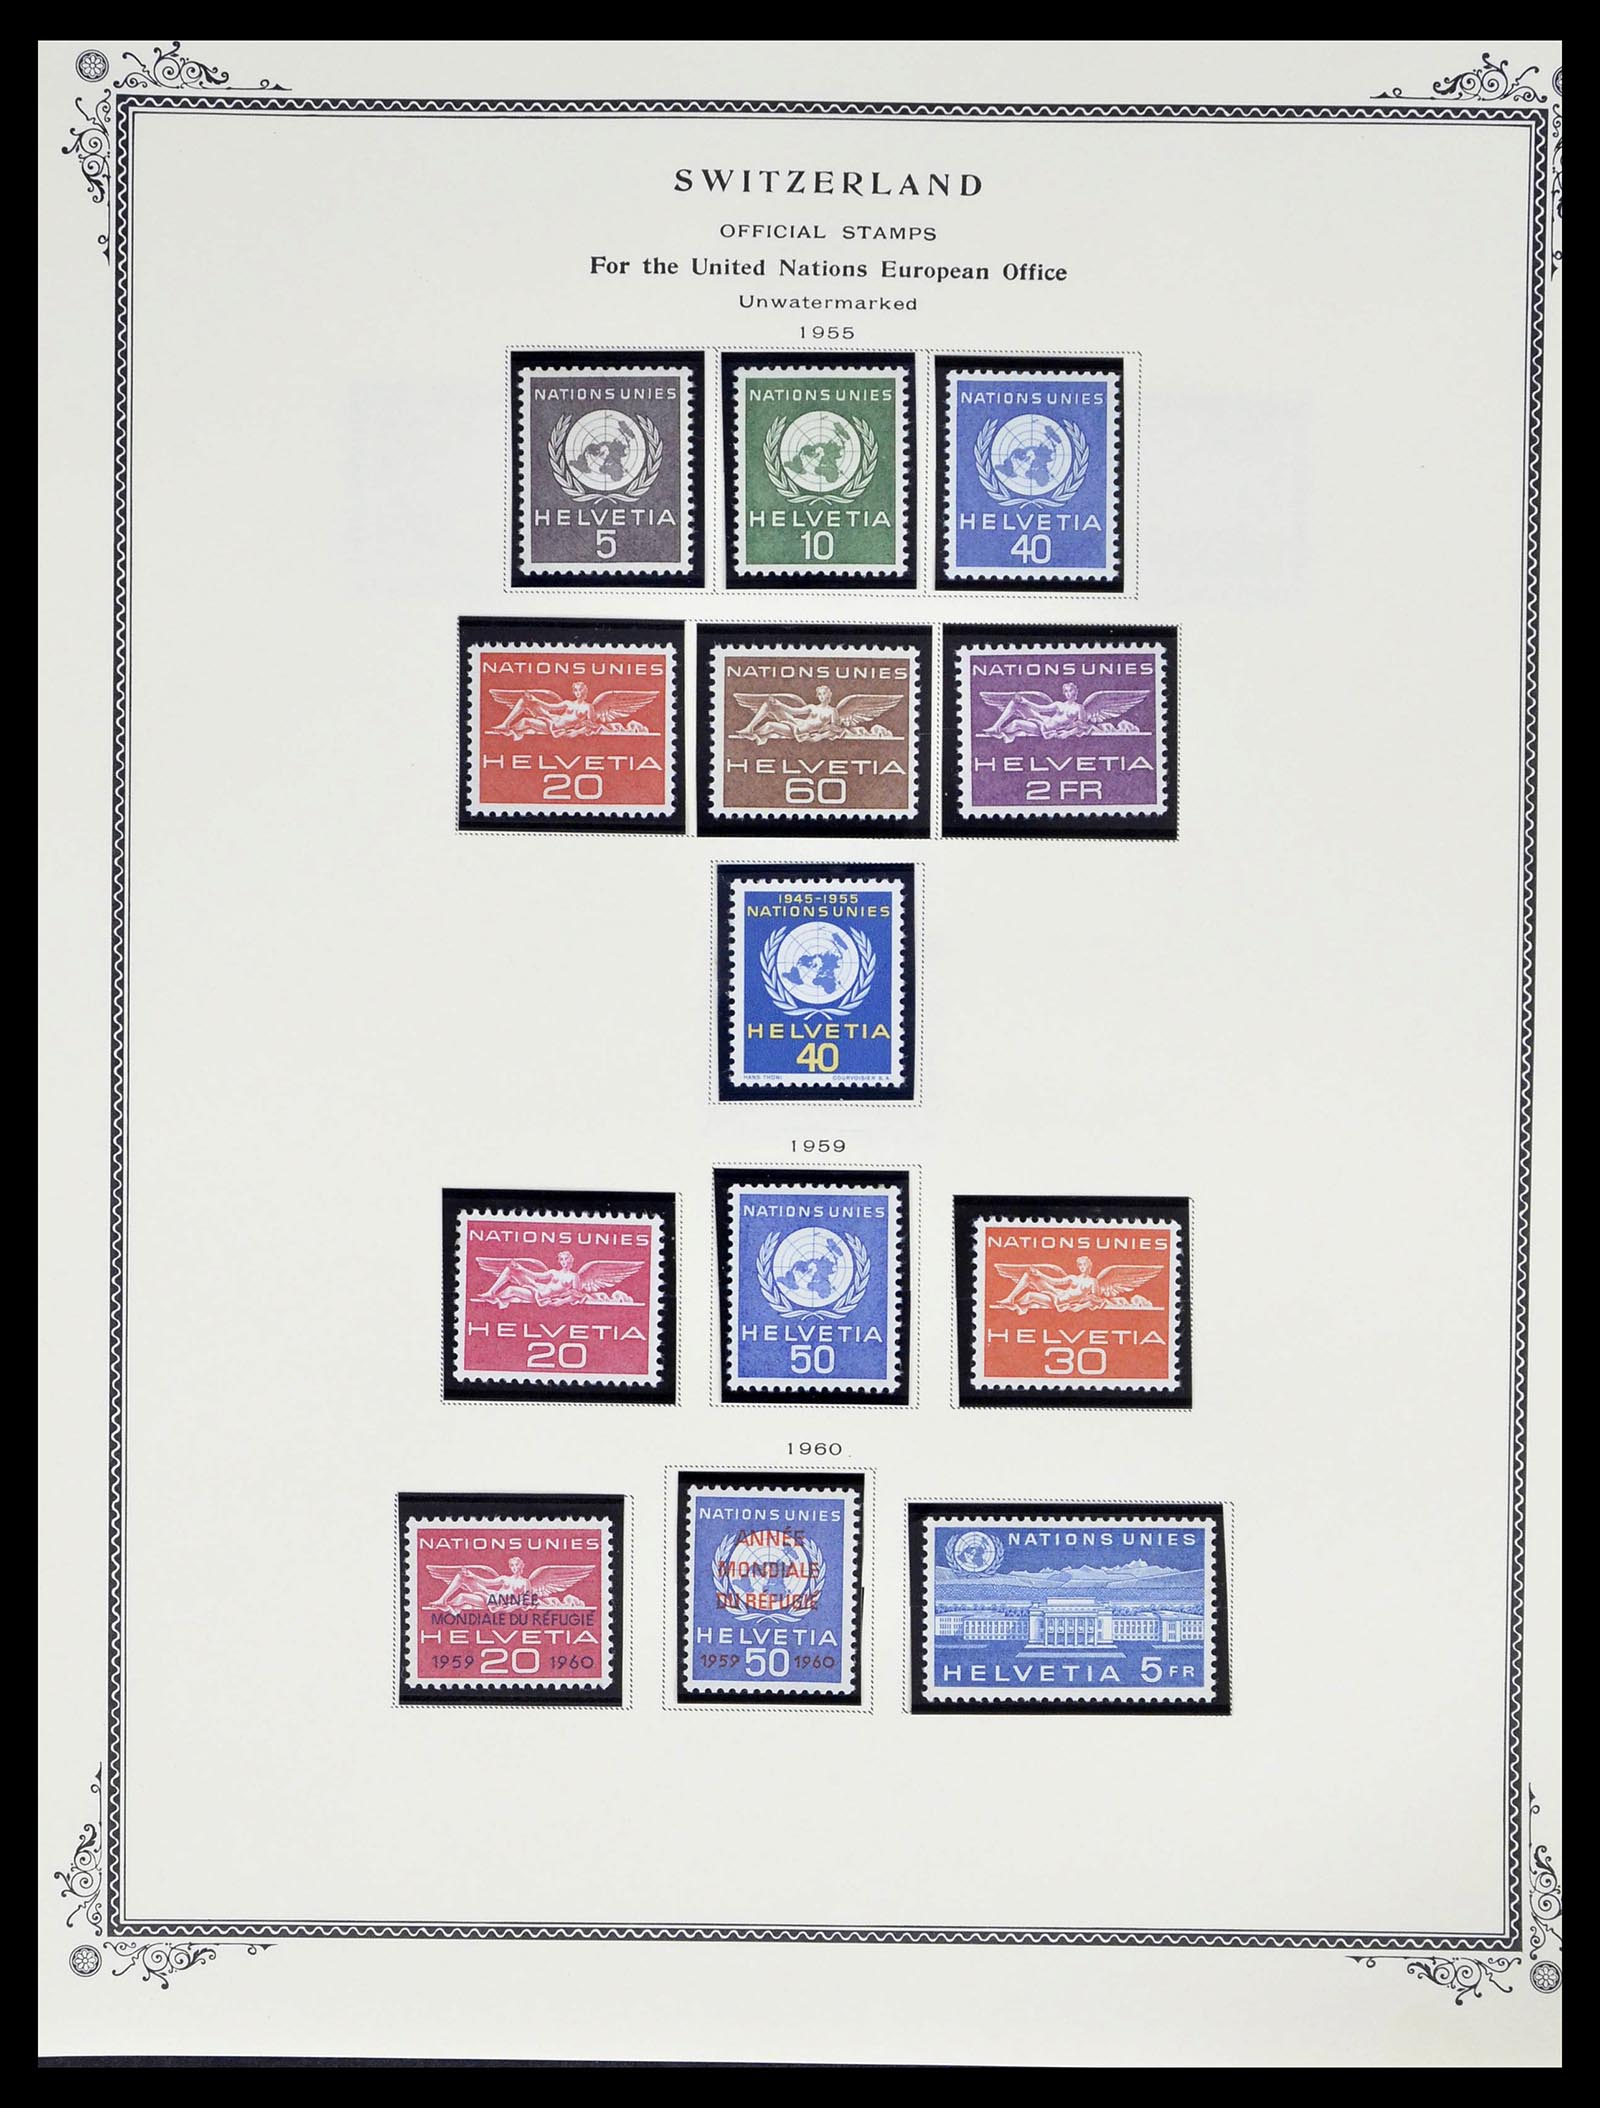 39178 0258 - Stamp collection 39178 Switzerland 1850-1989.